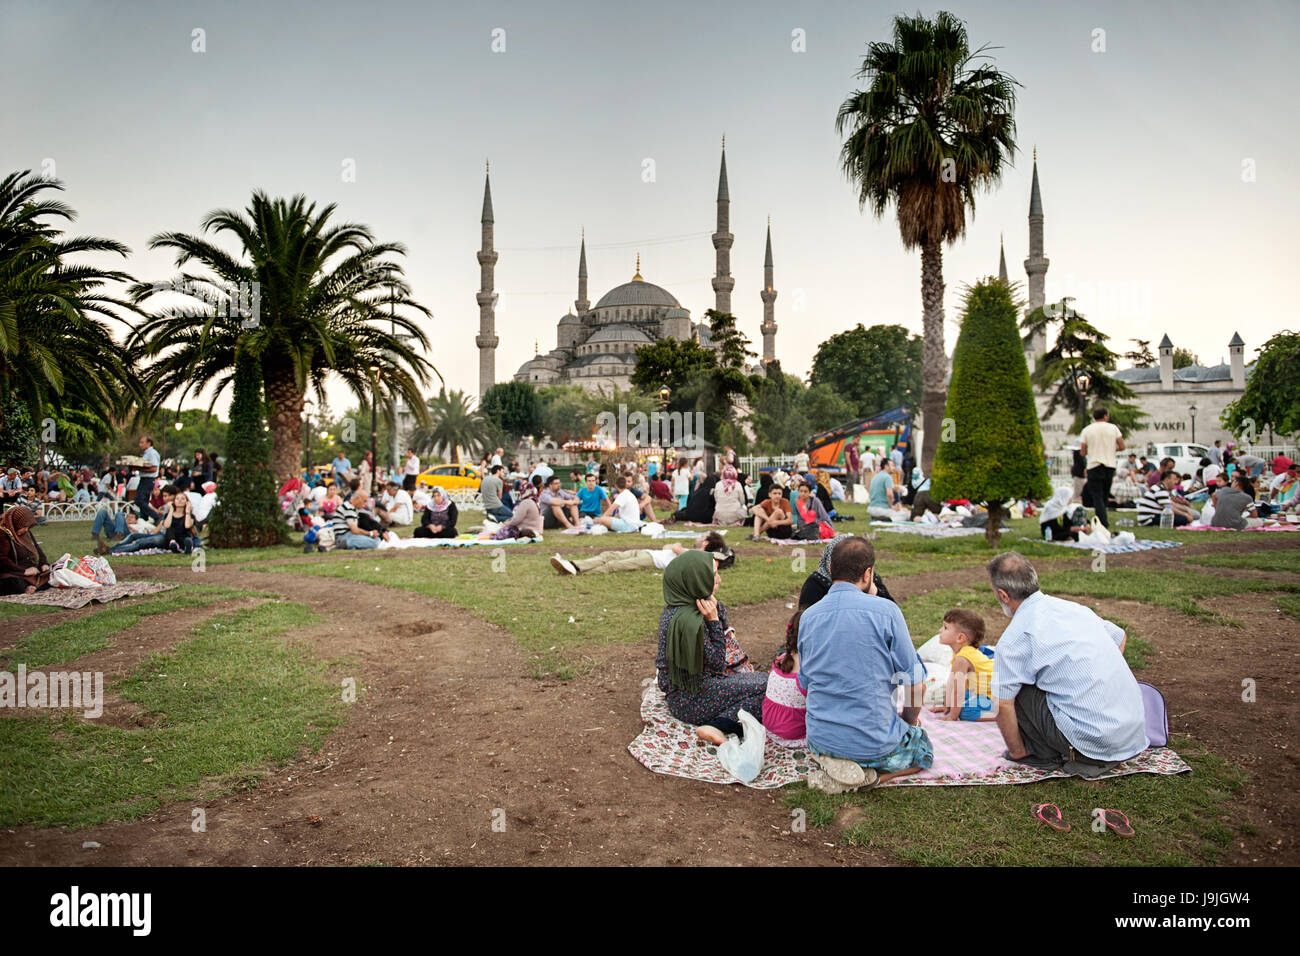 Fast breaking picnic during Ramadan Stock Photo